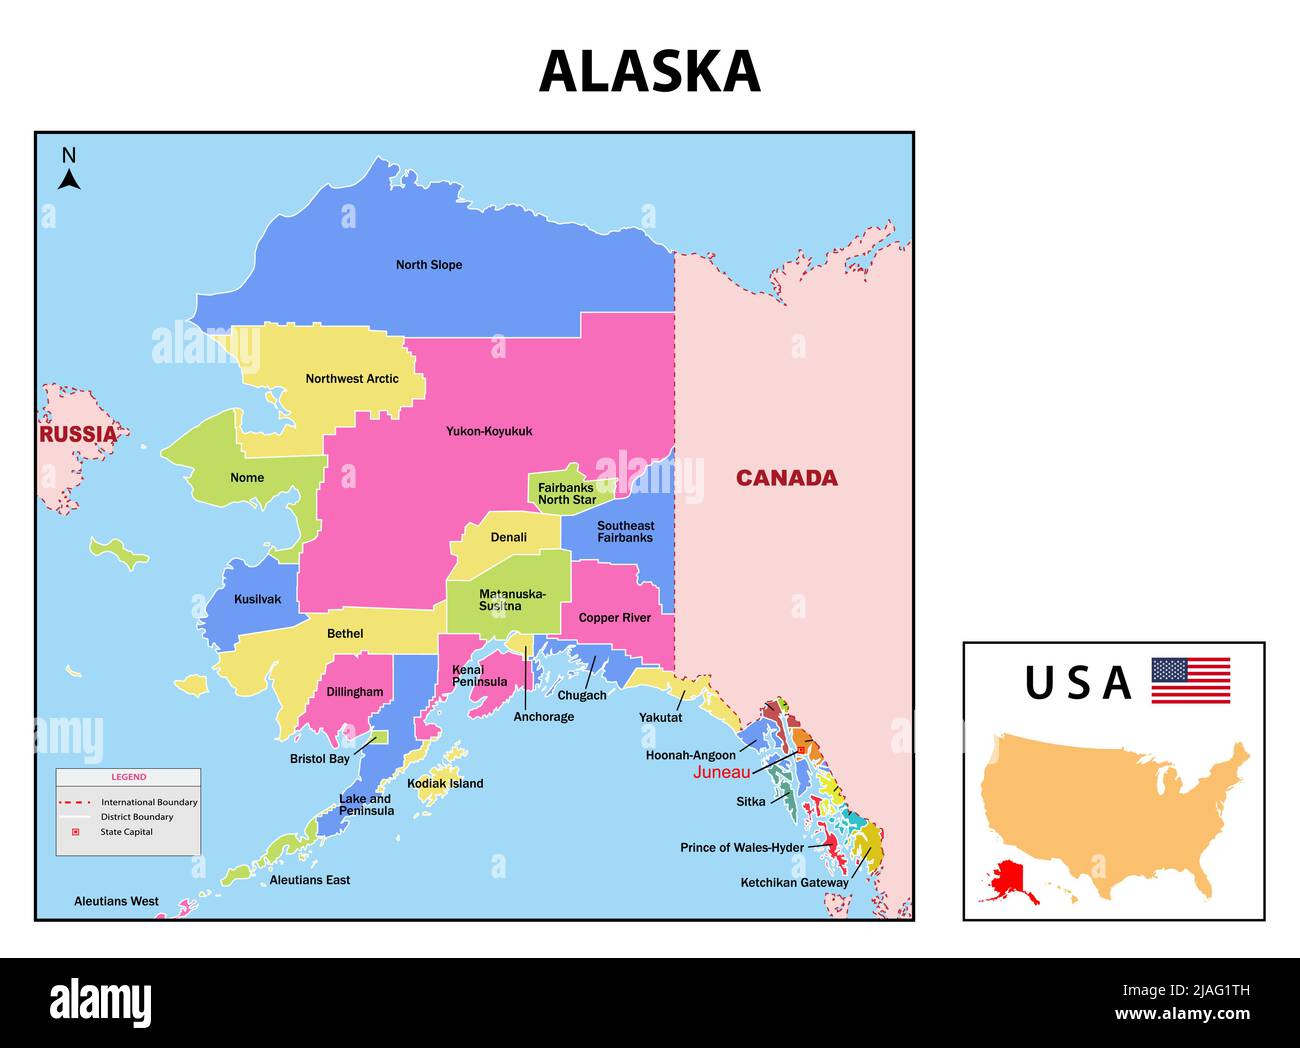 1910 Color Map of Alaska with Aleutian/Bering Sea Insert 